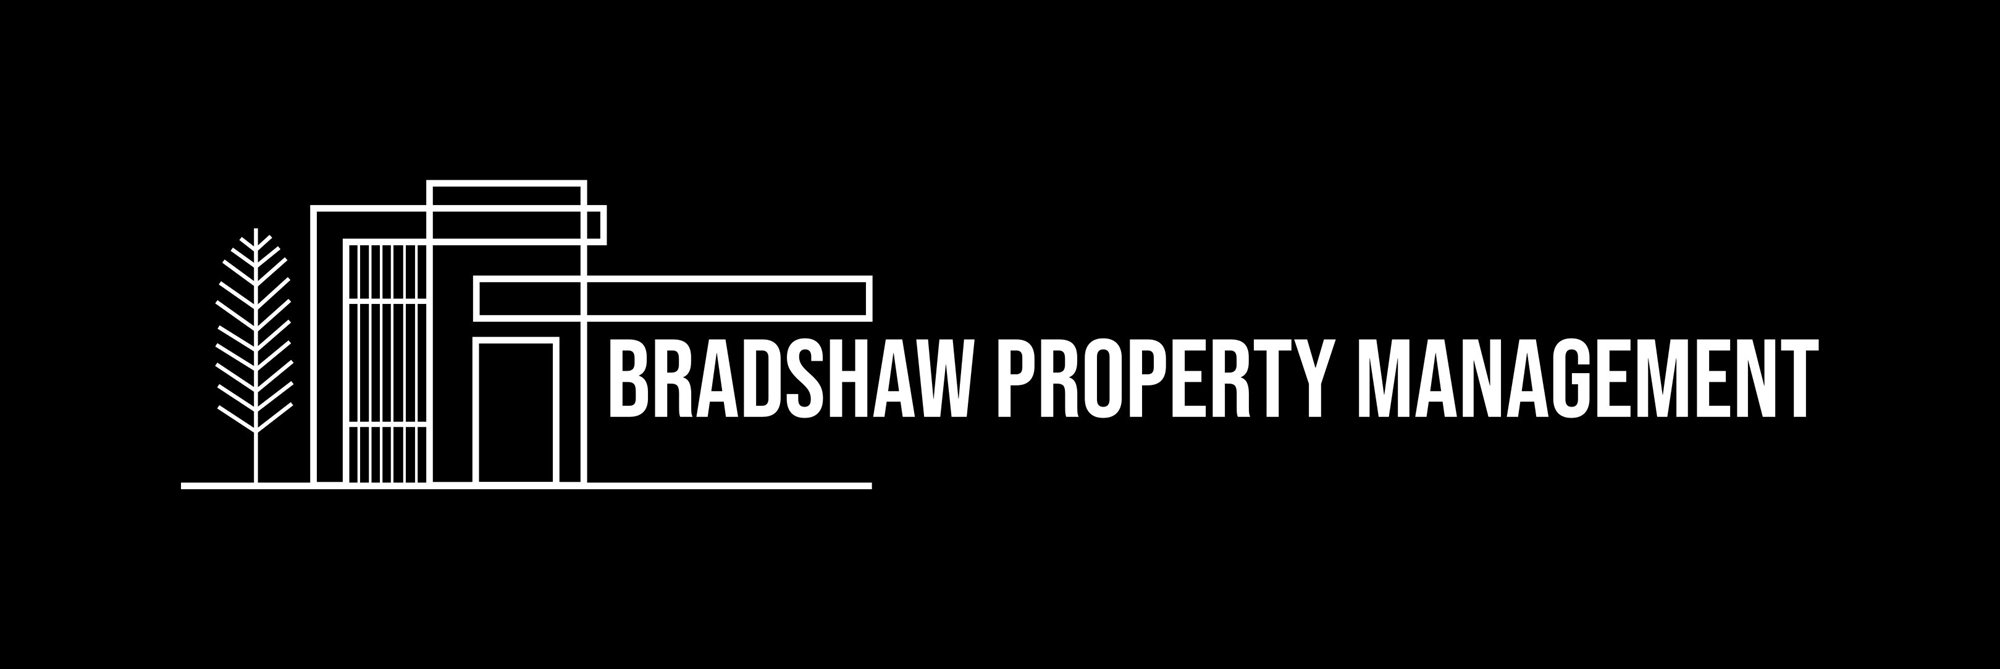 Bradshaw Property Management